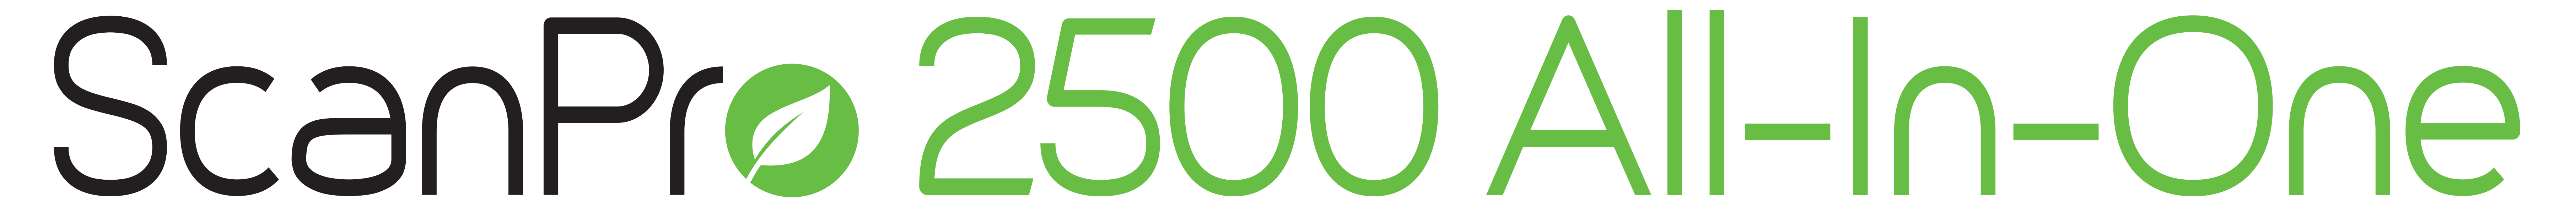 ScanPro-2500-AIO-Logo